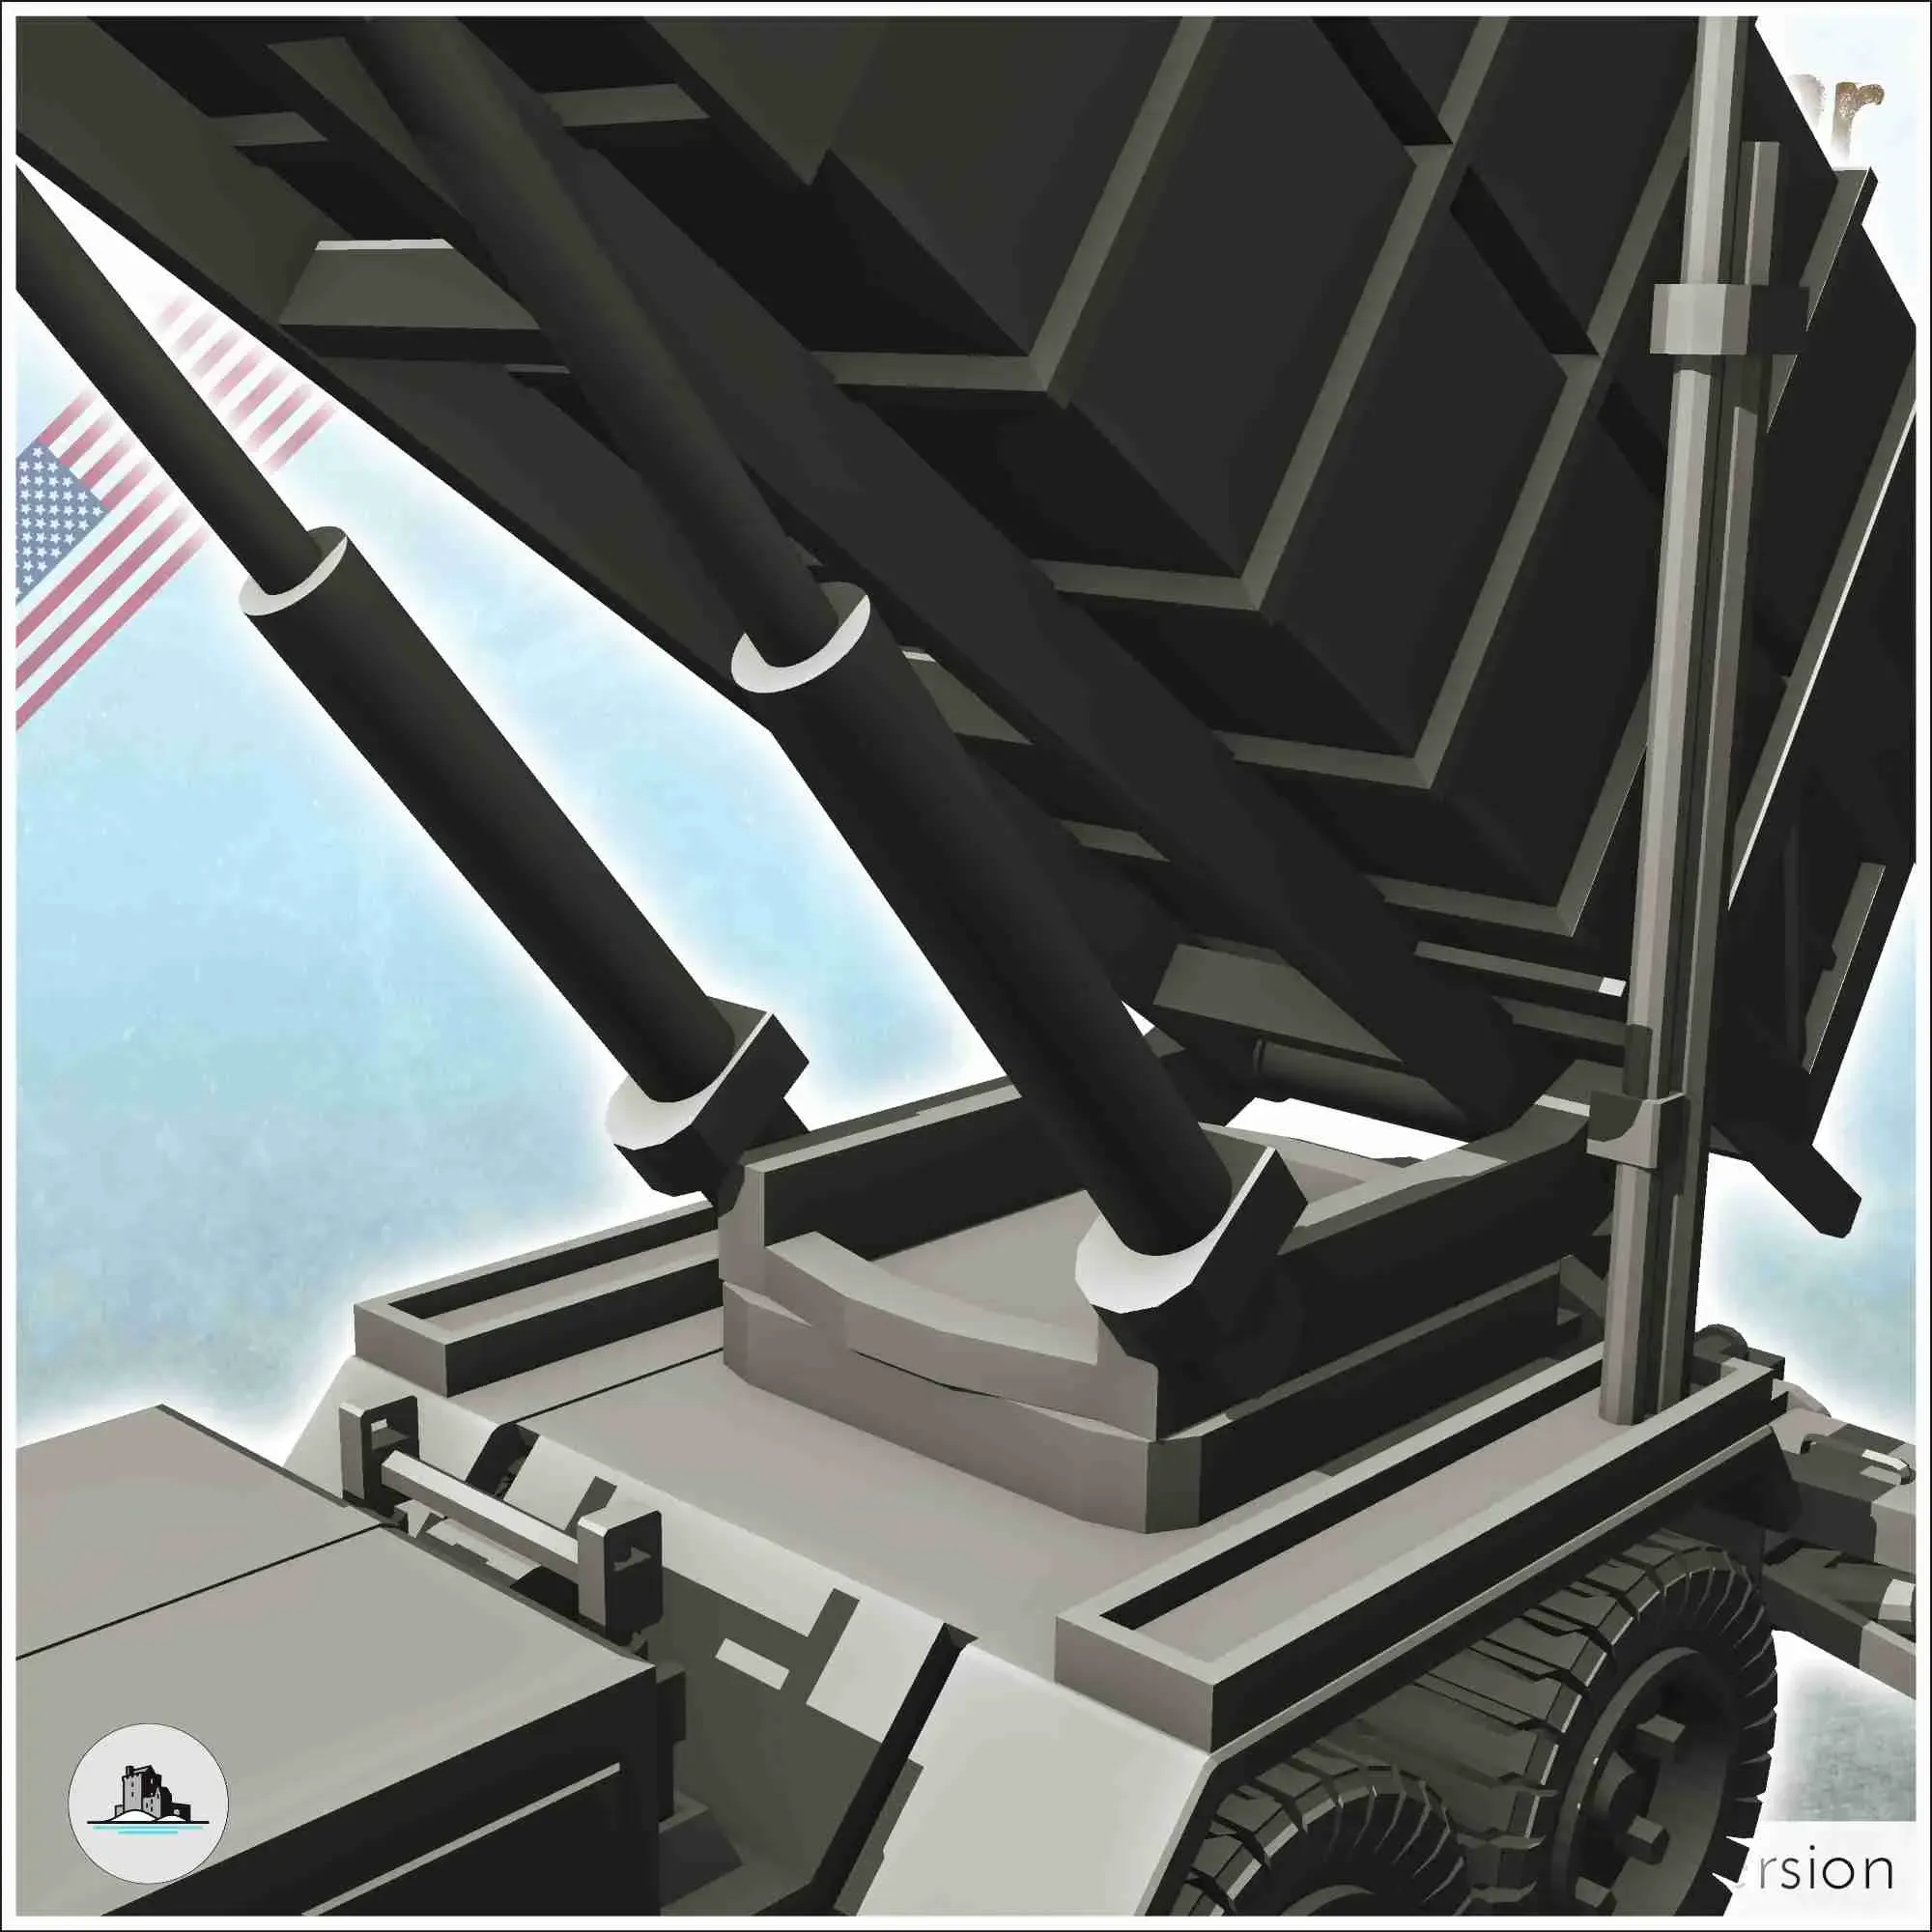 US MIM-104 Patriot air defense battery system (3) - scenery